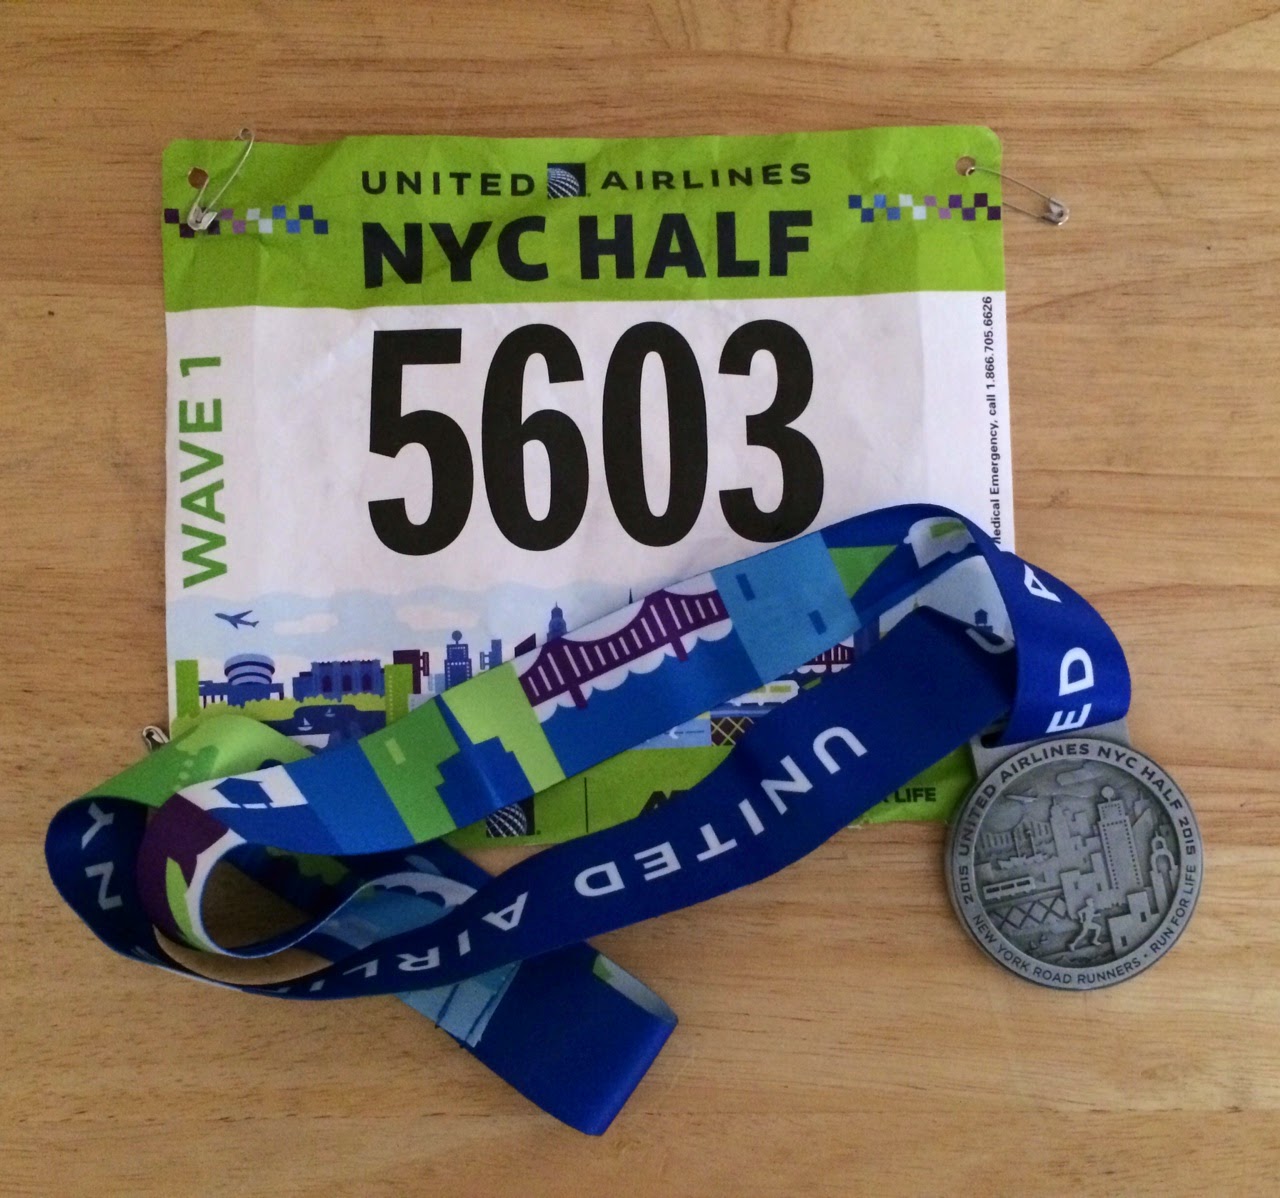 rundangerously 2015 nyc half marathon race photos & results